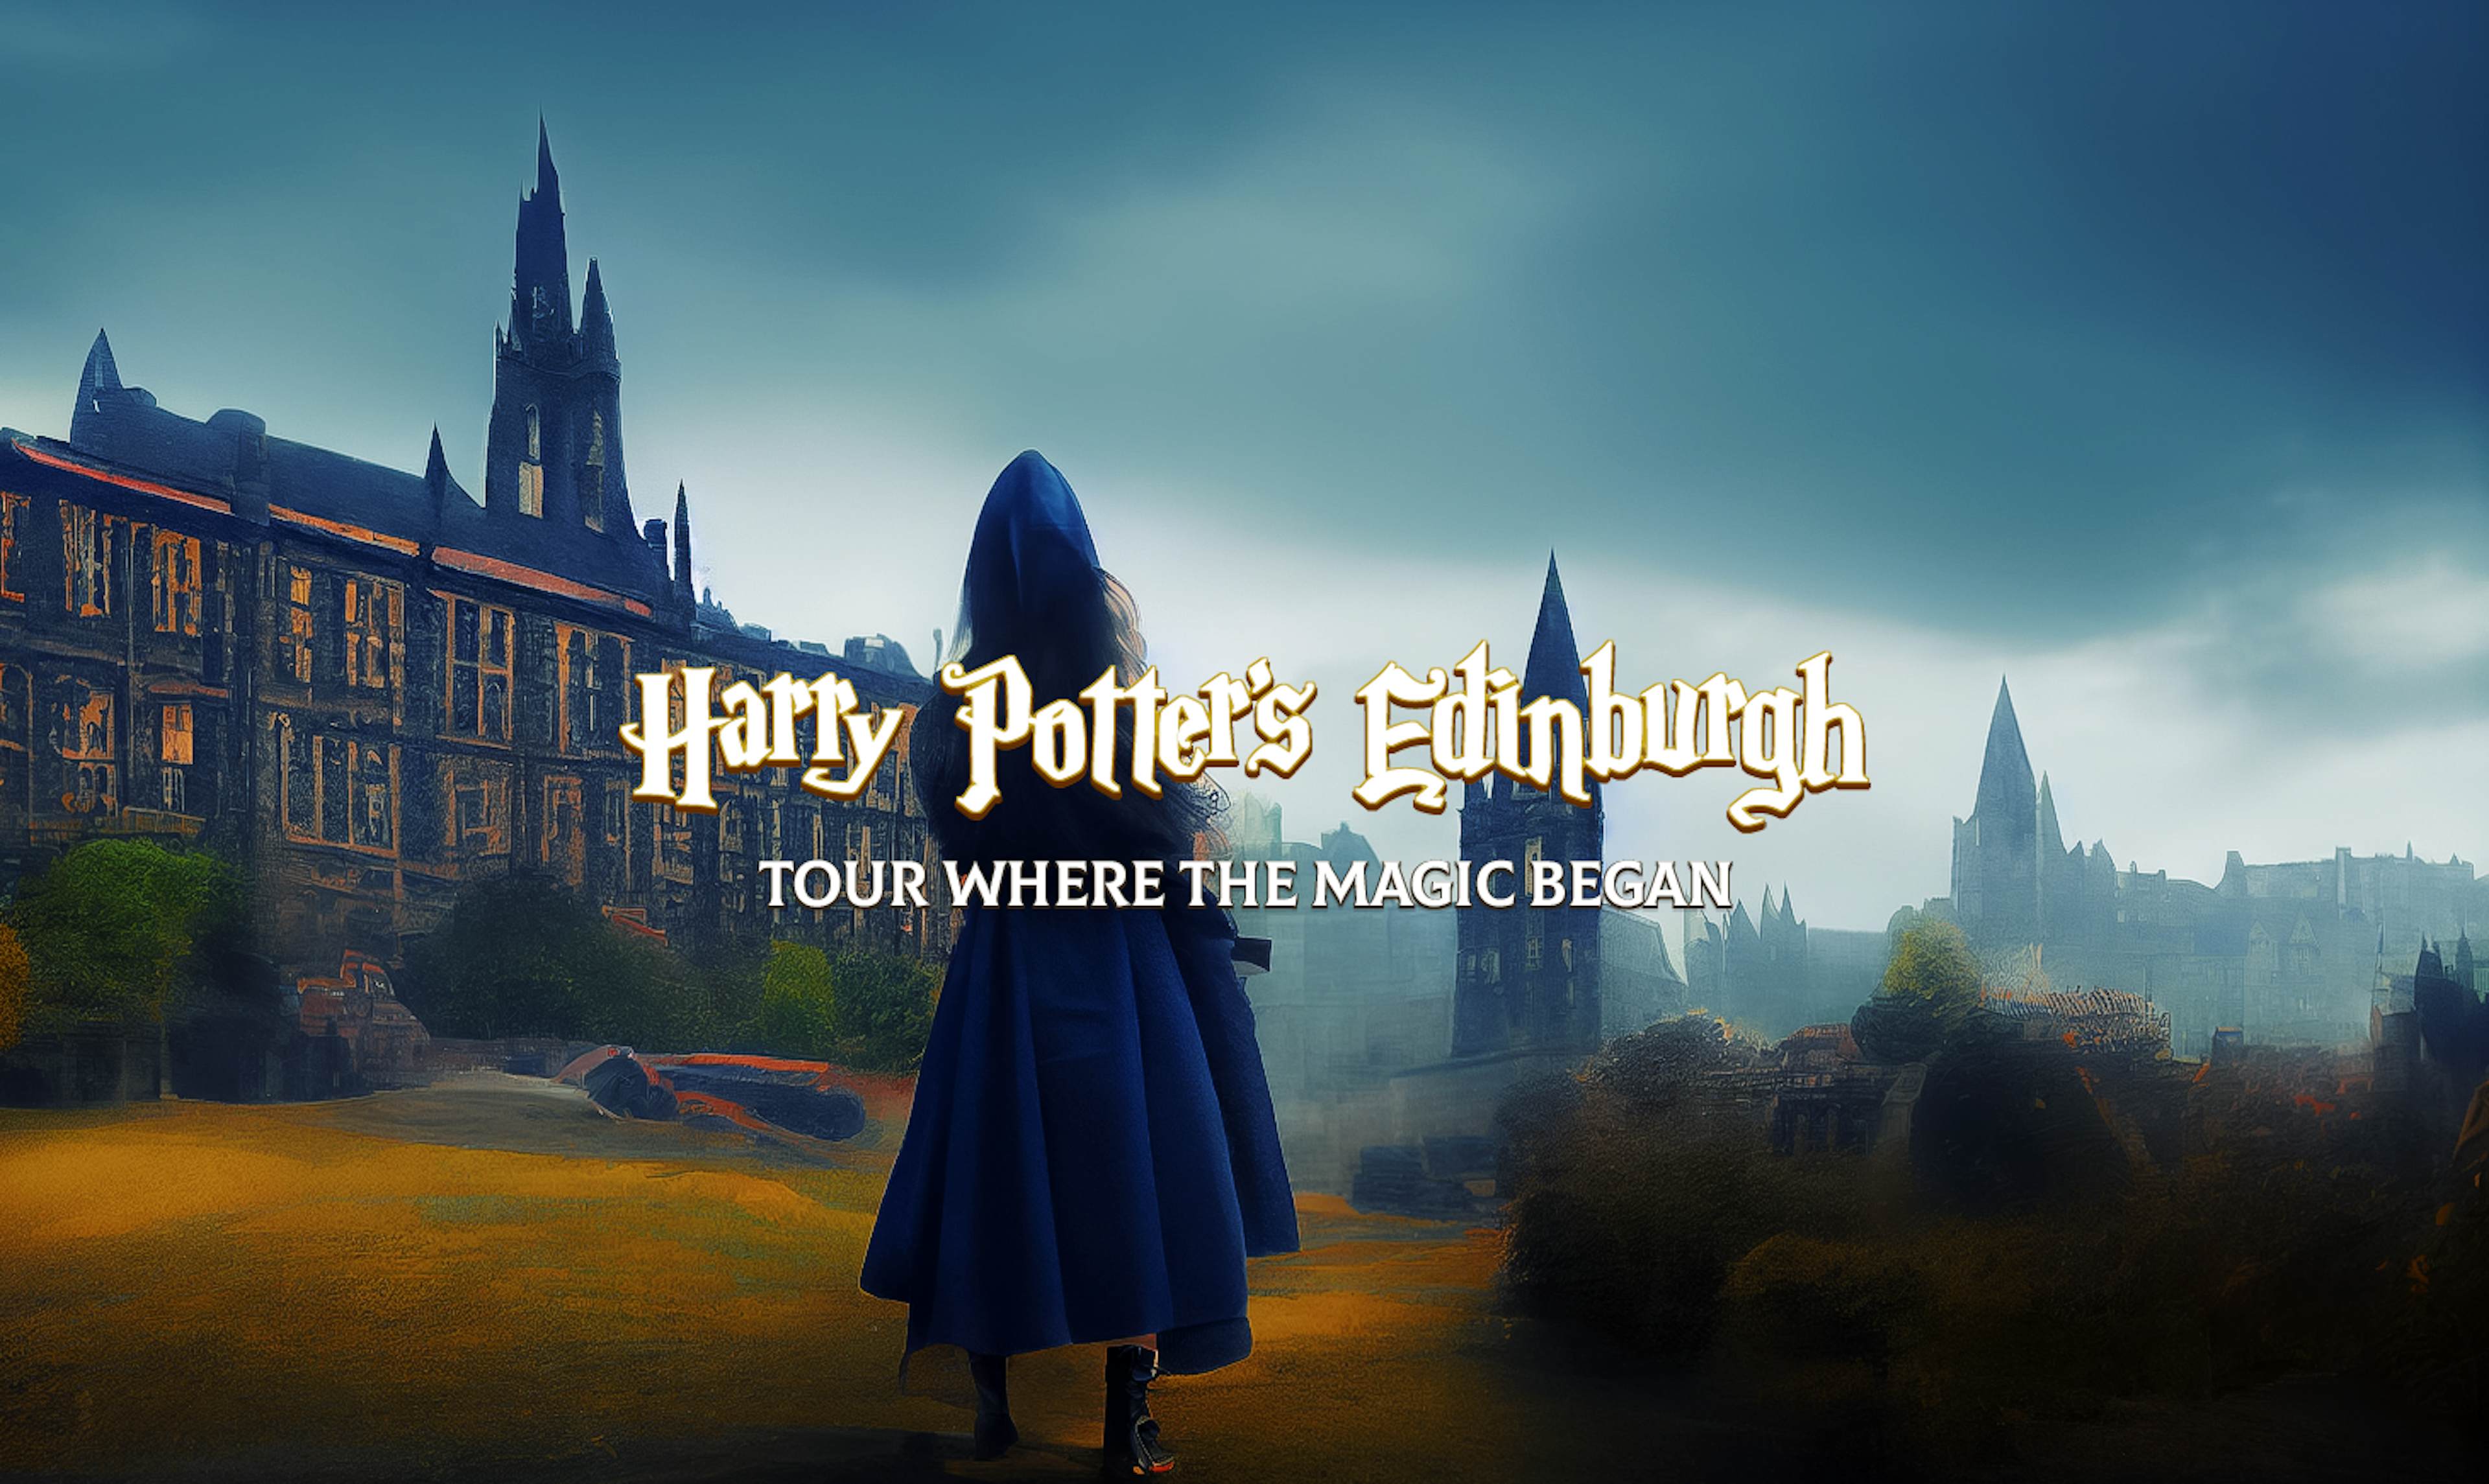 Edinburgh City of Wizards